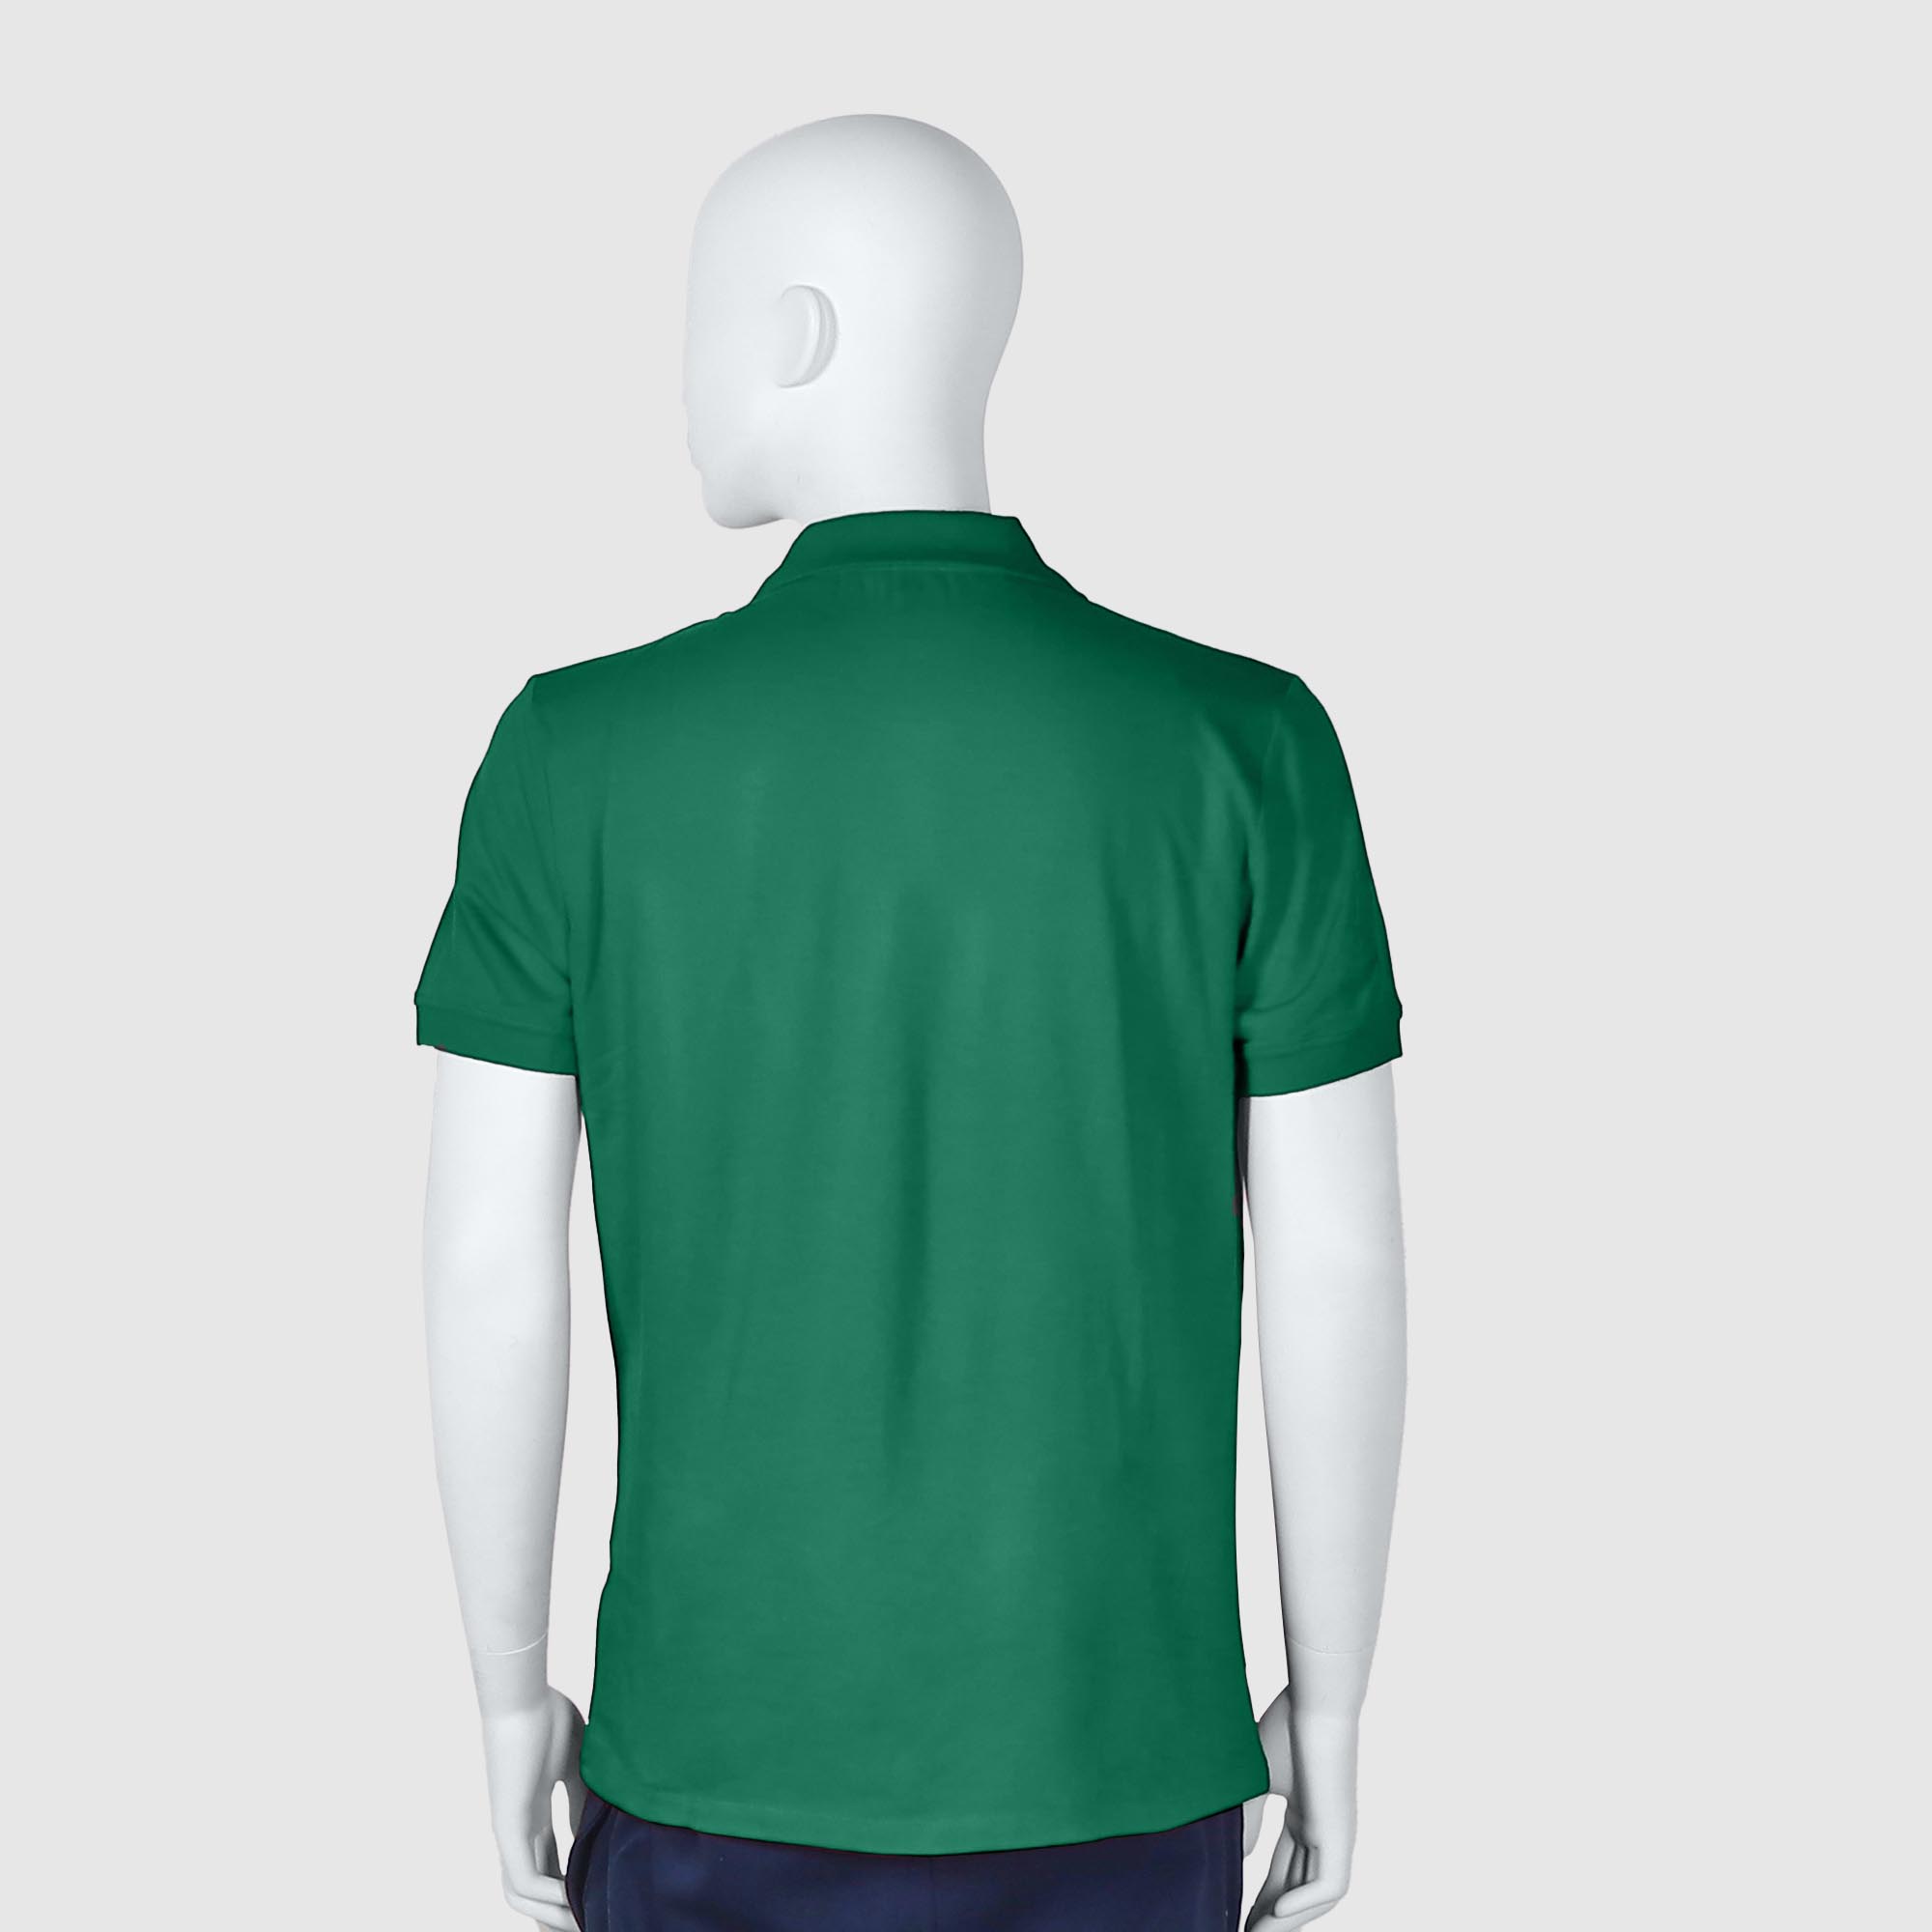 Мужская футболка-поло Diva Teks зелёная (DTD-09), цвет зелёный, размер 50-52 - фото 2